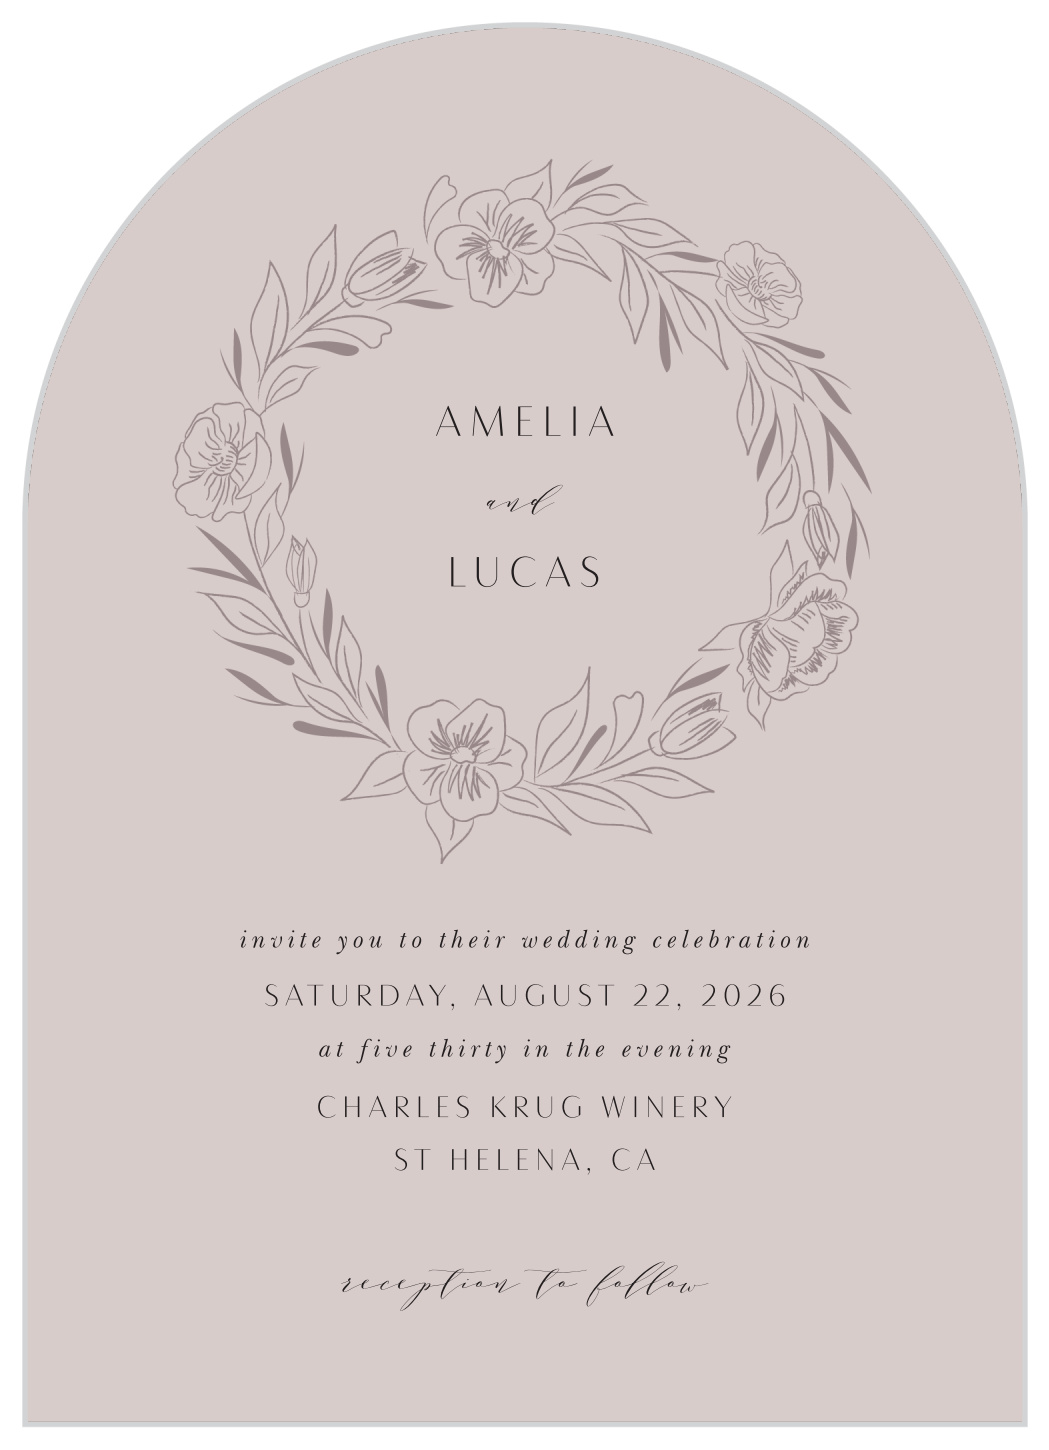 Wreath of Florals Wedding Arch Invitations